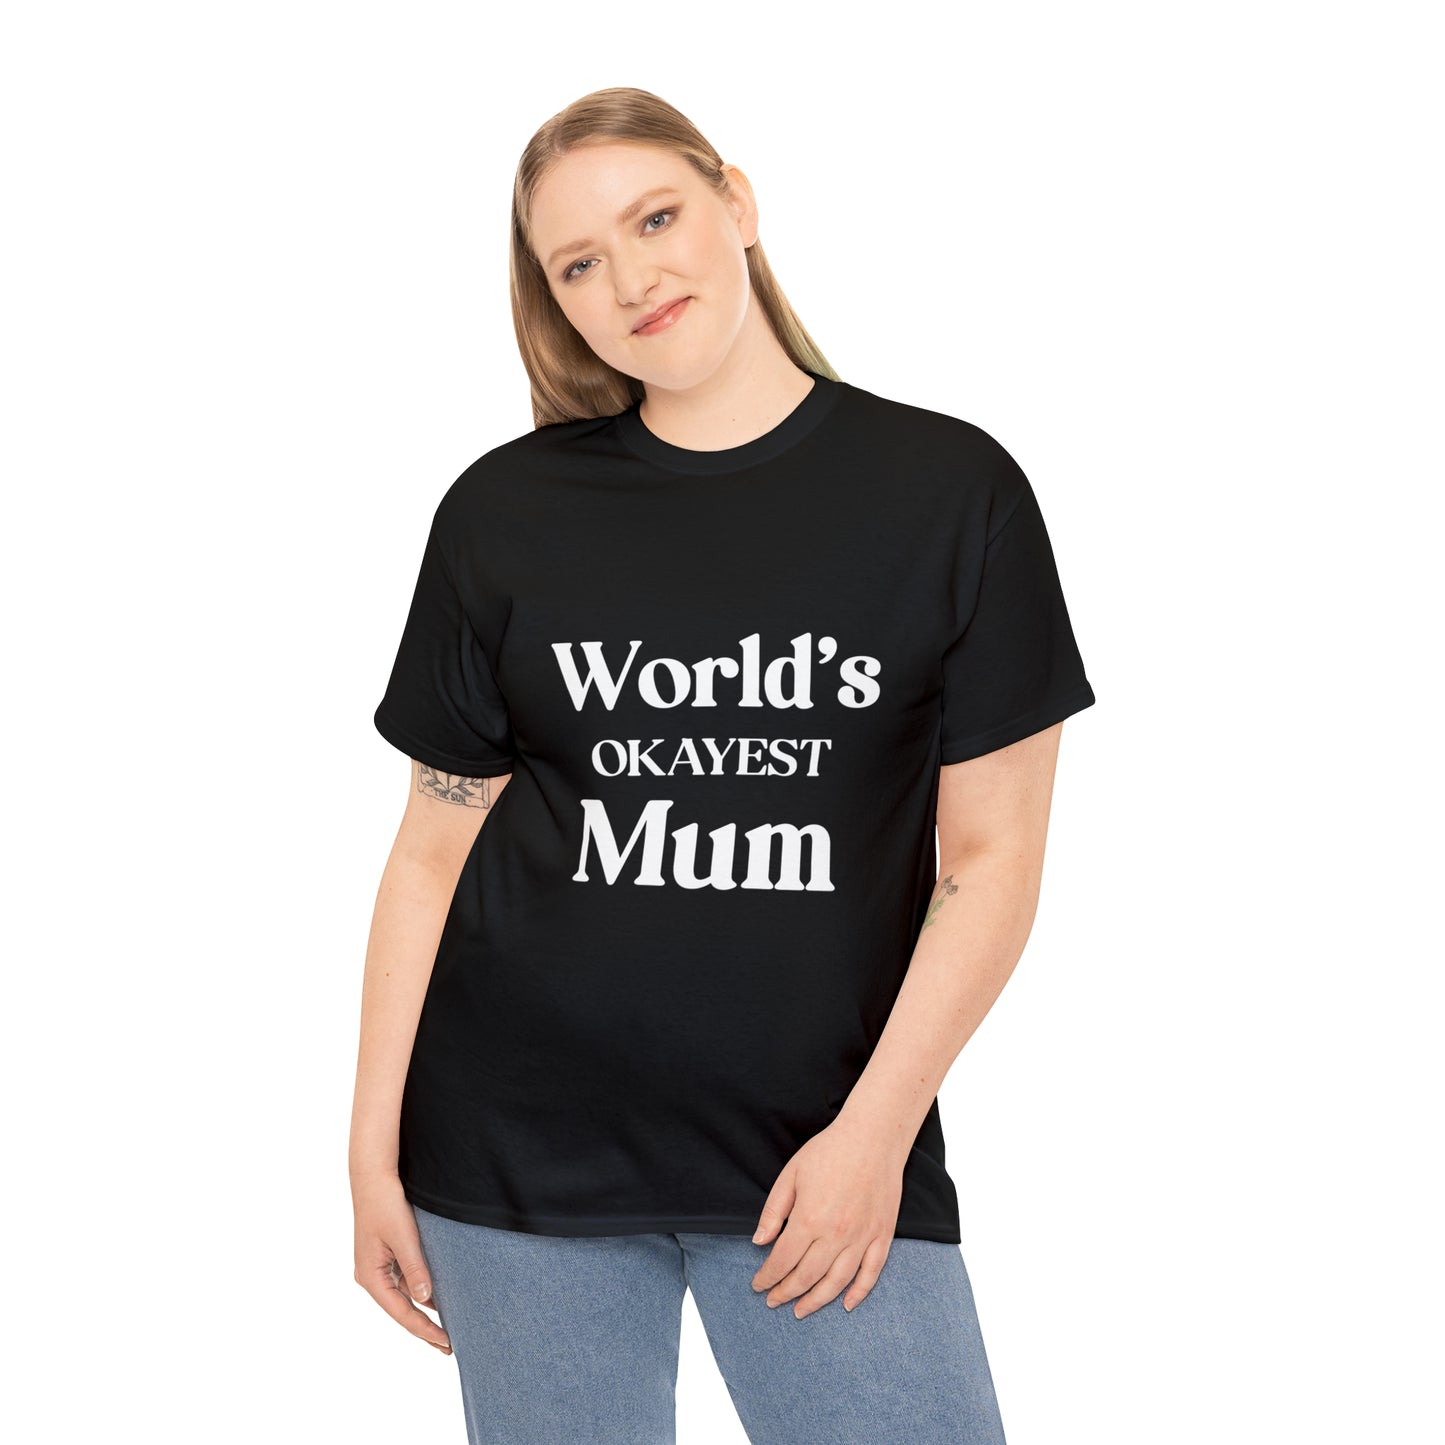 Unique "WORLD'S OKAYEST MUM" shirt